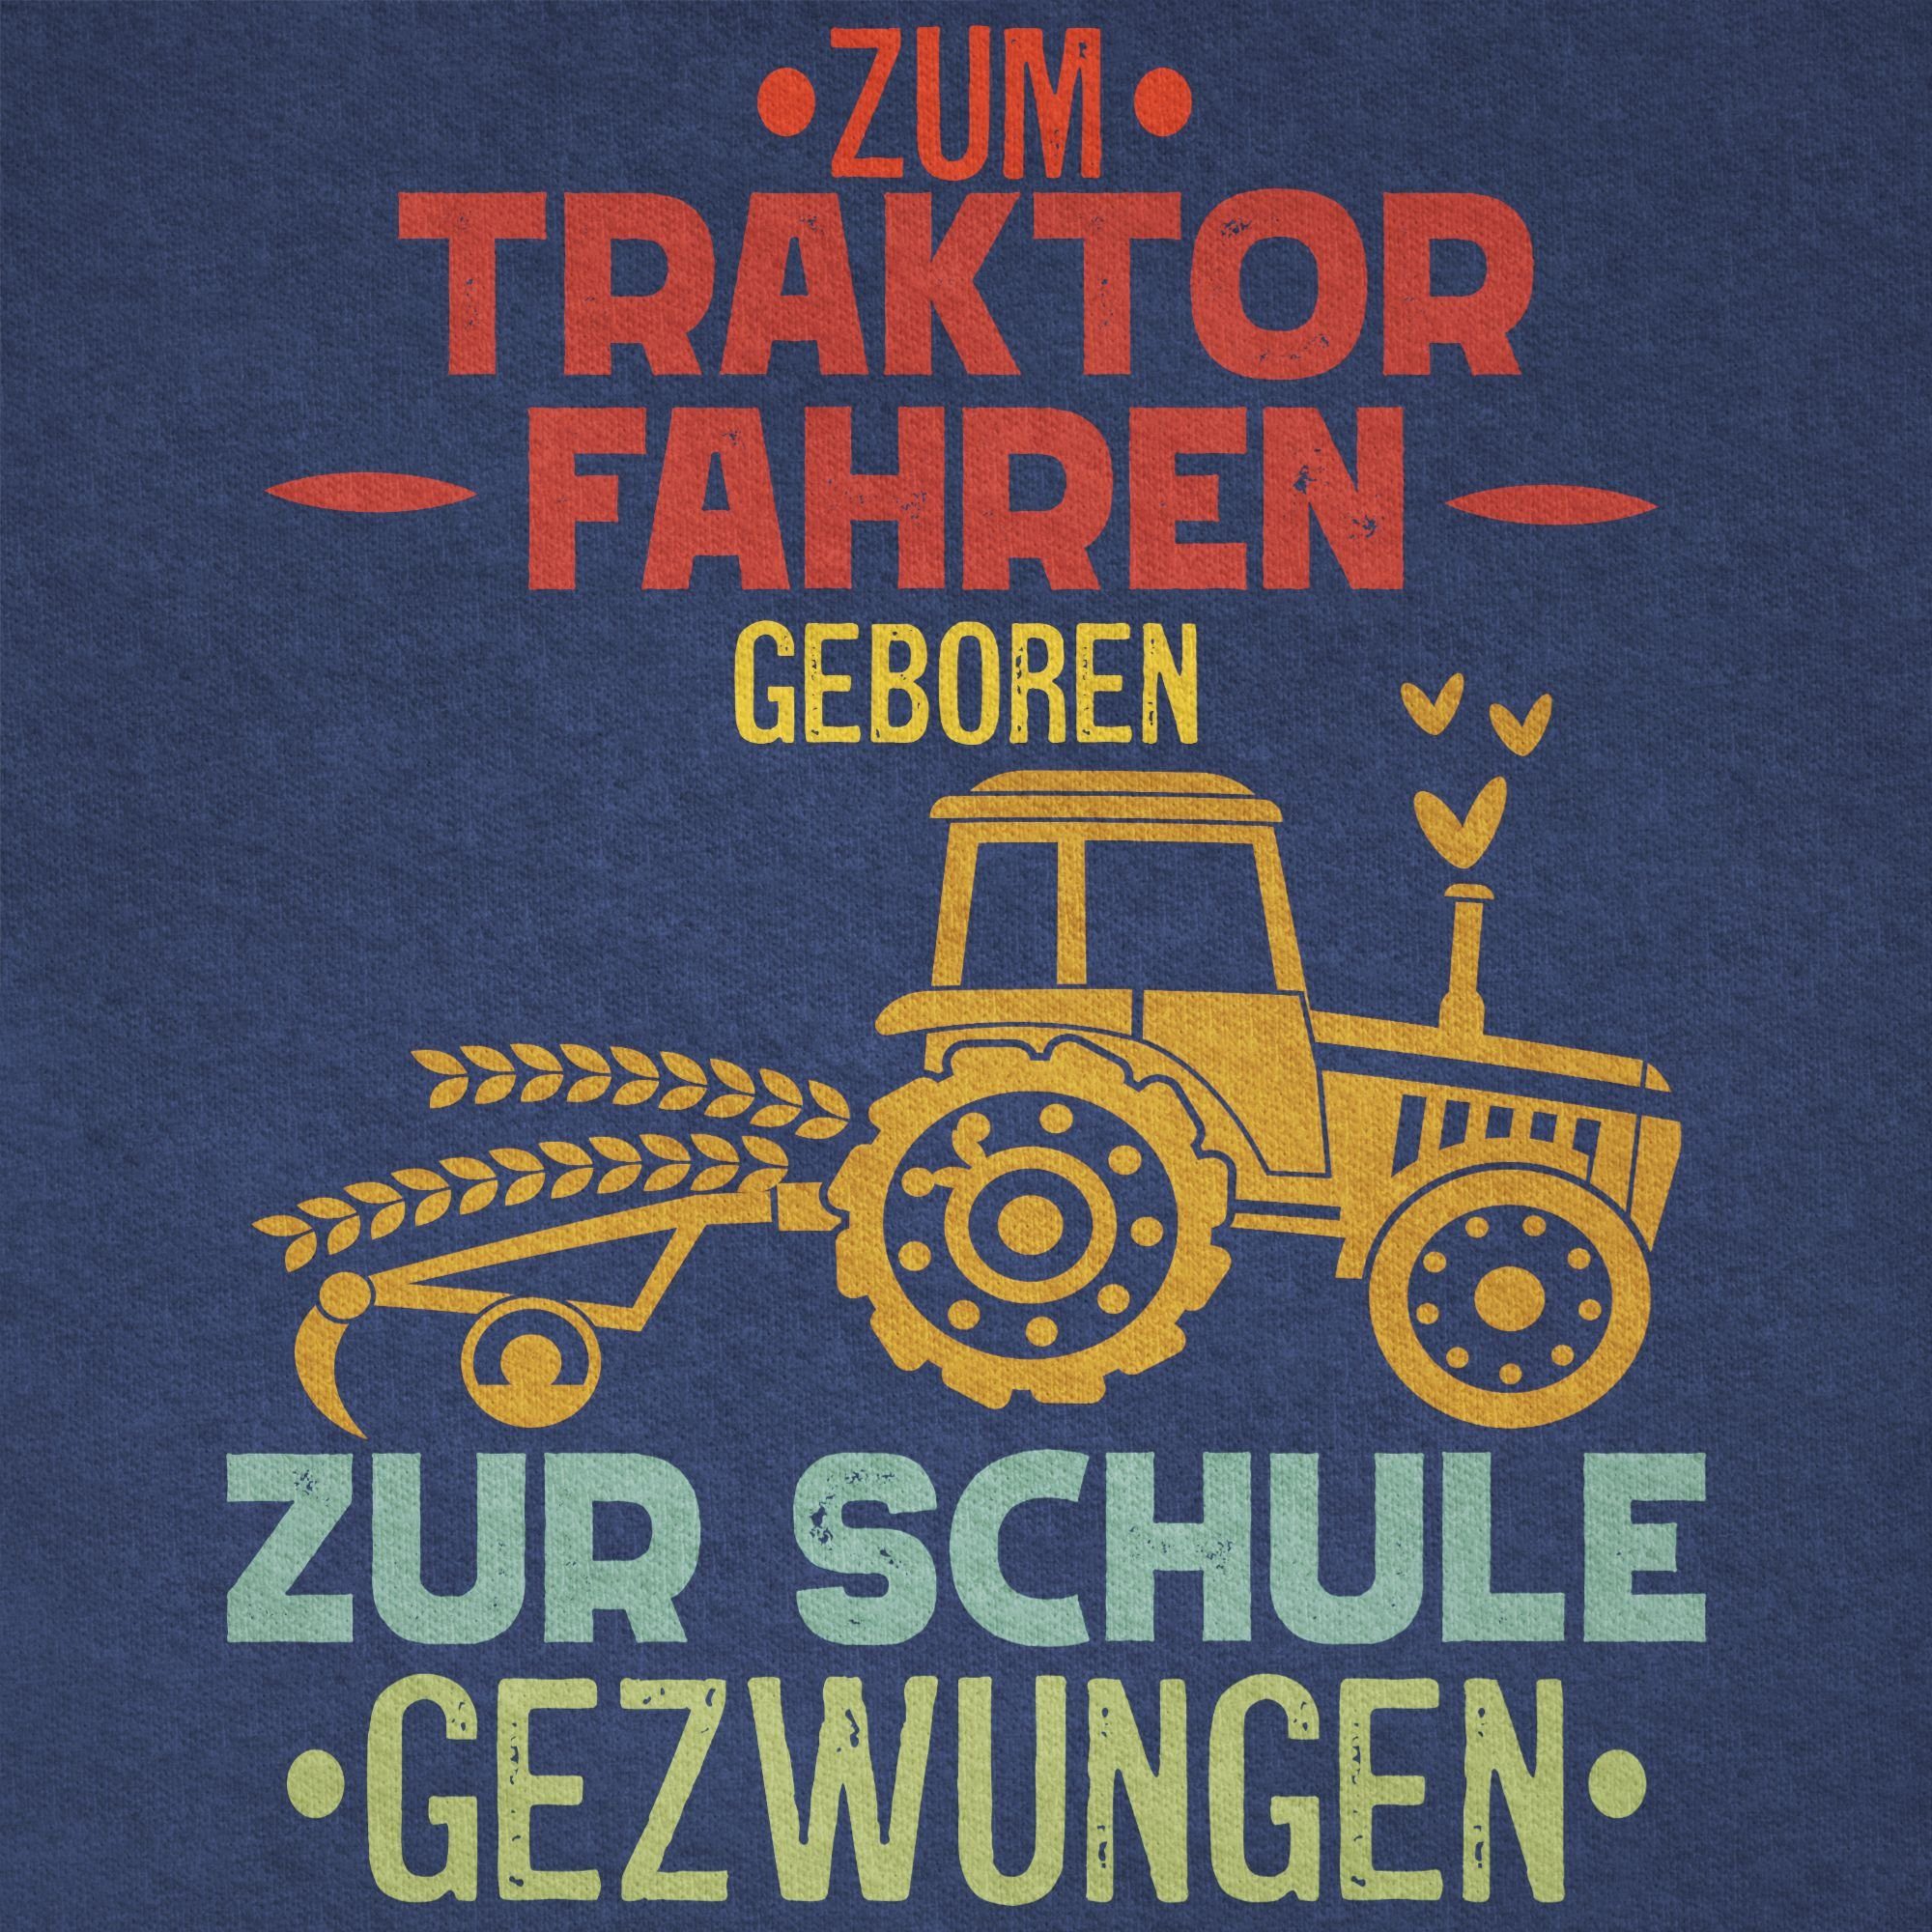 Shirtracer T-Shirt gezwungen geboren Einschulung zur Vintage fahren Meliert Junge Geschenke Dunkelblau Schulanfang Zum Traktor Schule 03